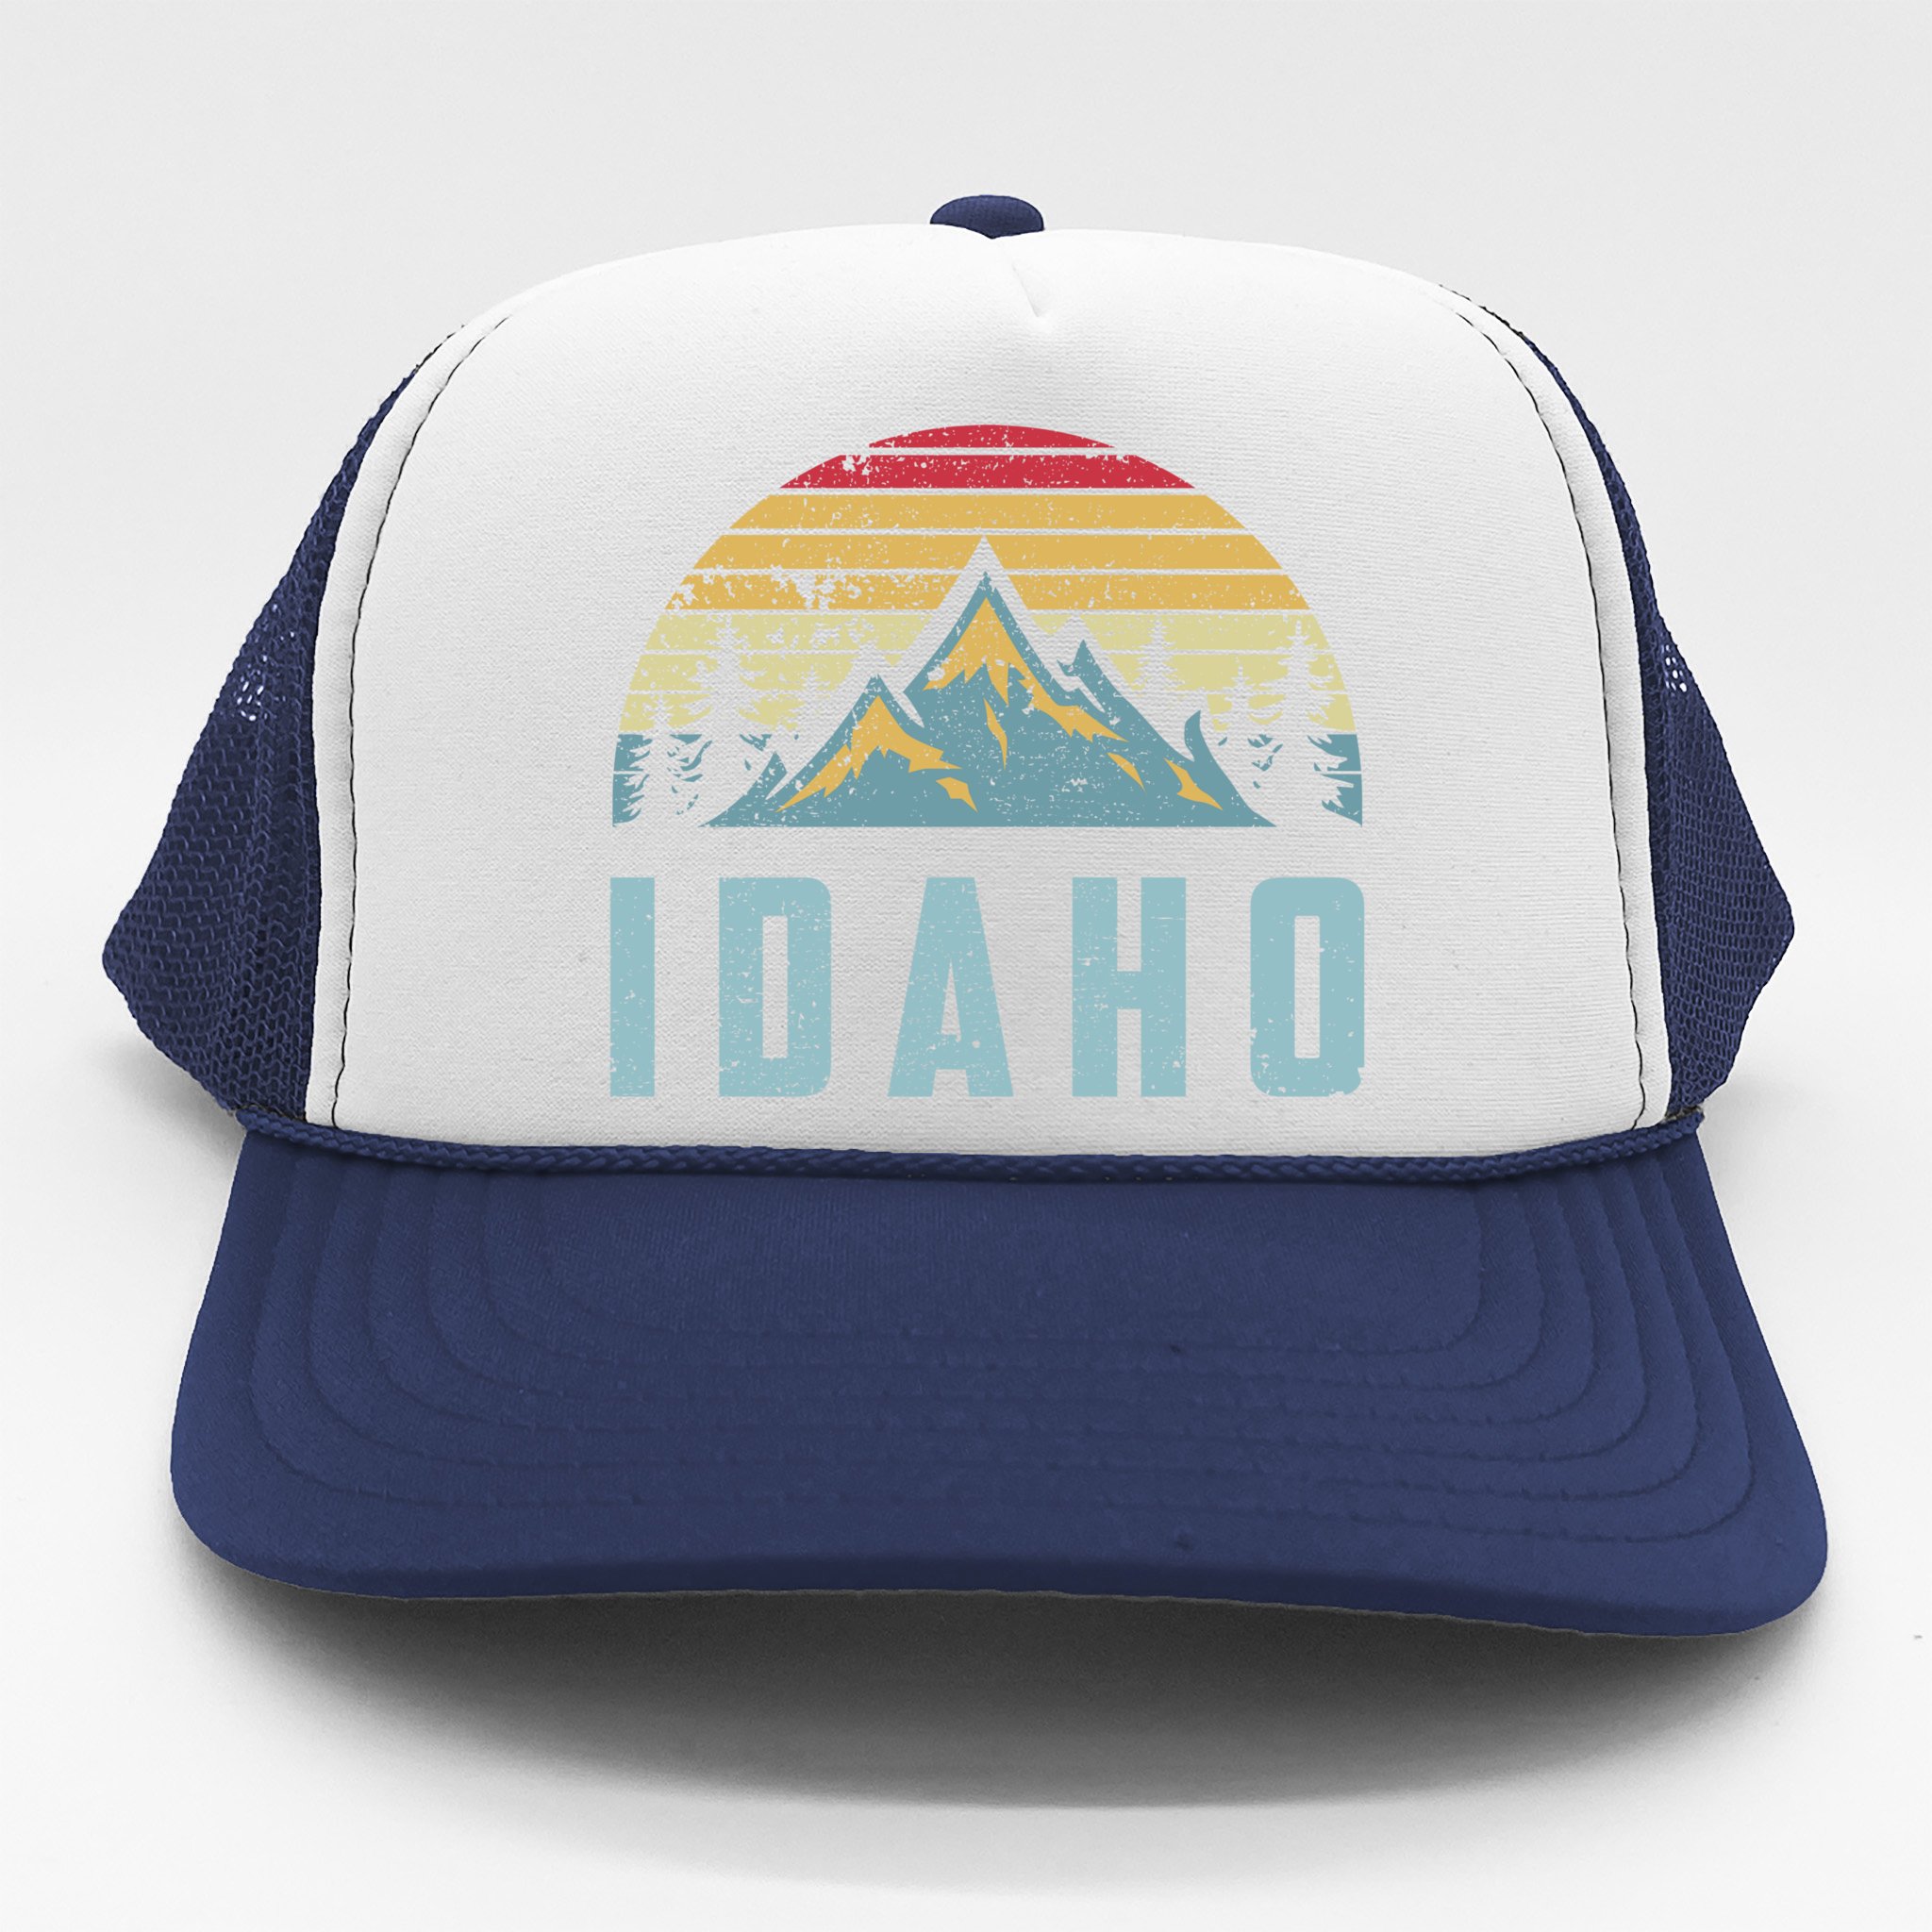 Idaho Trucker Hats Vintage Trucker Hats Adjustable Trucker Foam